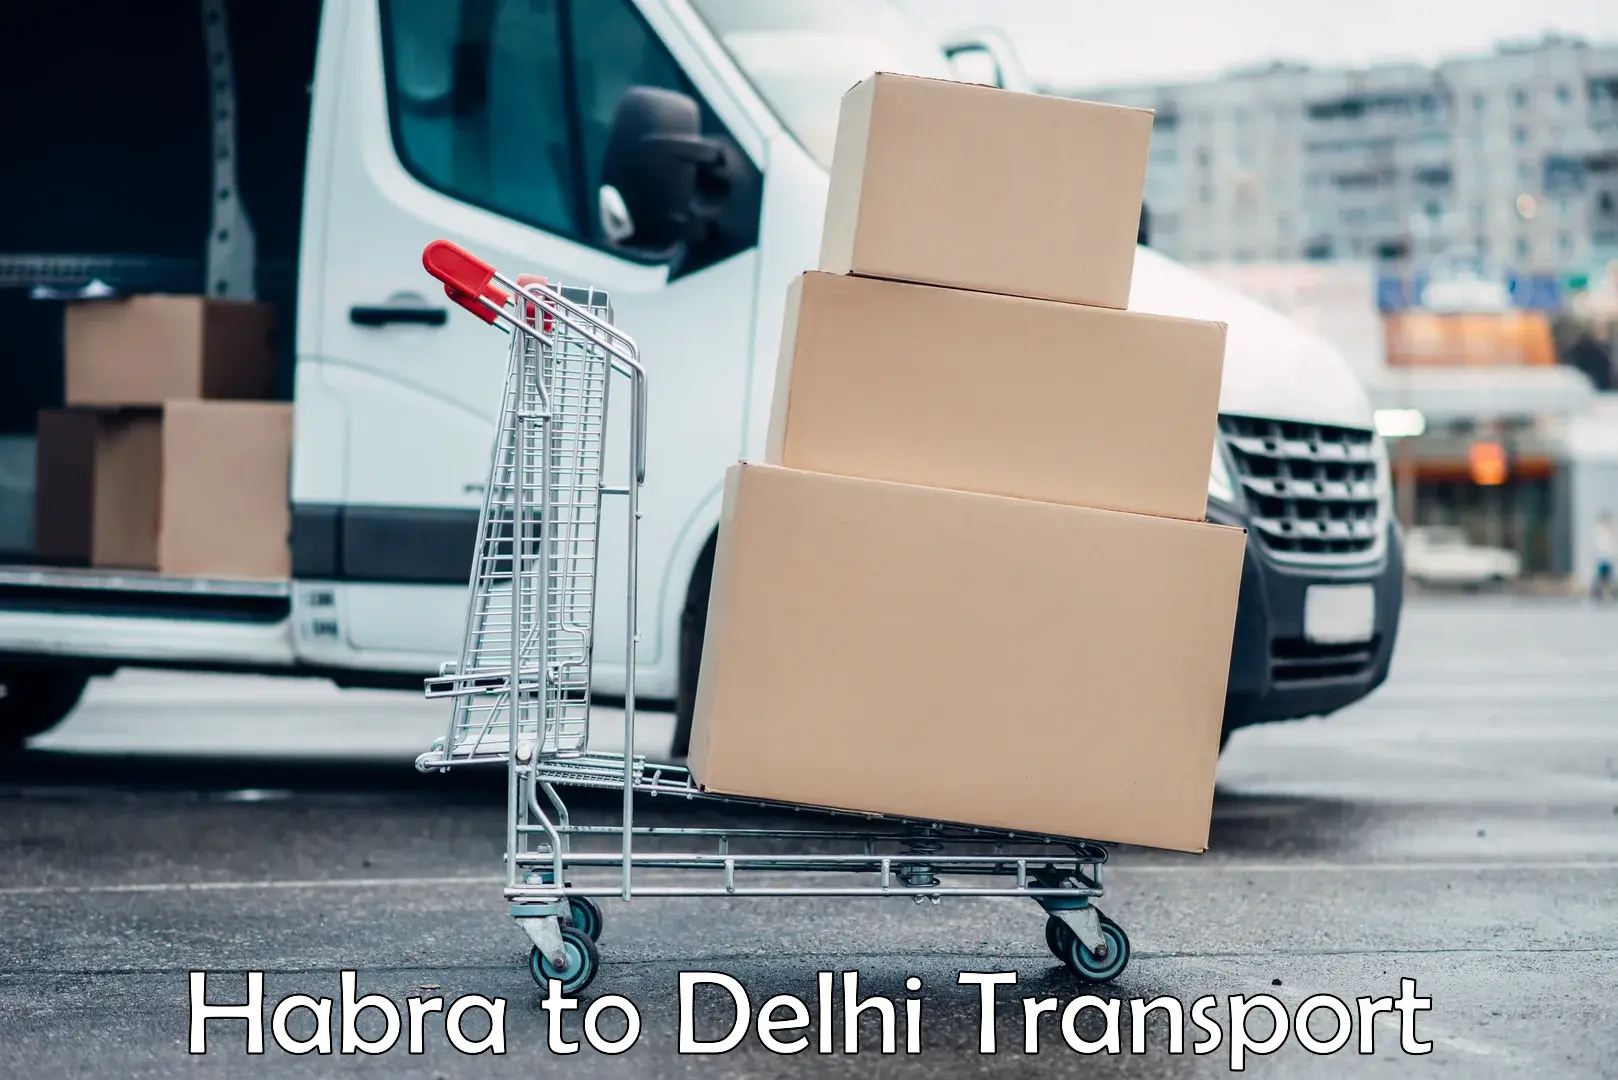 Commercial transport service Habra to Delhi